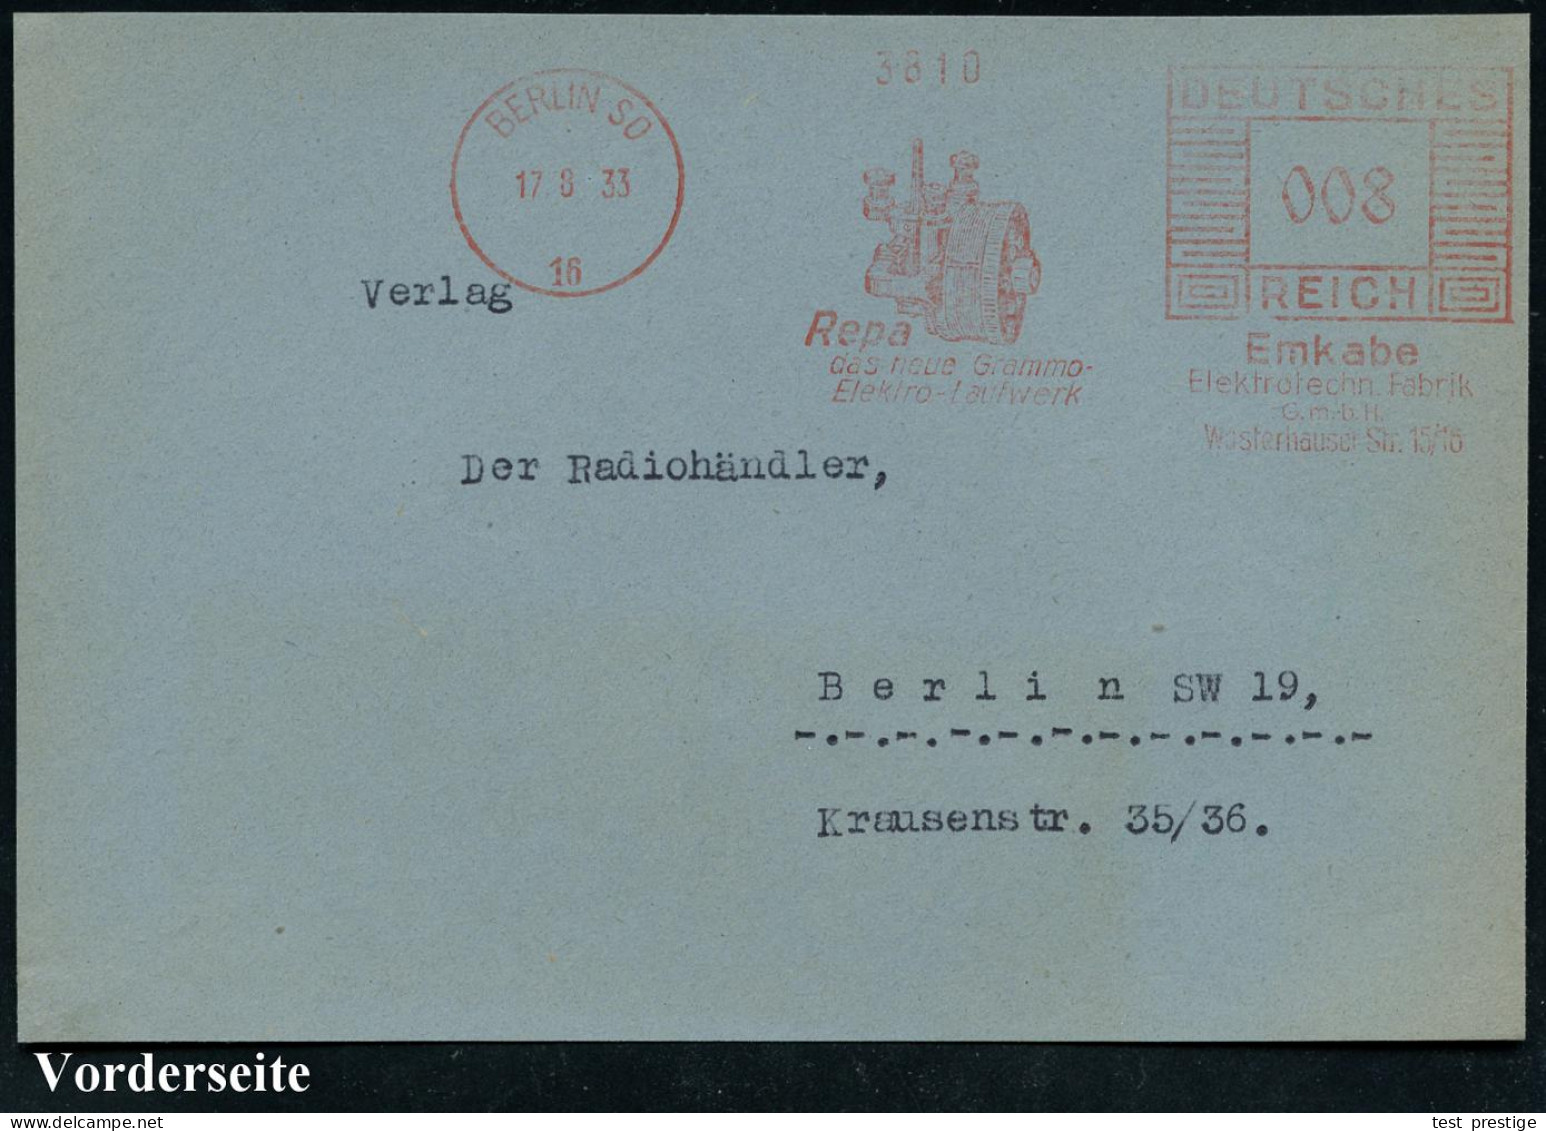 BERLIN SO/ 16/ Repa/ Das Neue Grammo-/ Elektro-Laufwerk/ Emkabe.. 1933 (17.8.) AFS Francotyp (= Grammofon-Laufwerk) Beda - Musik